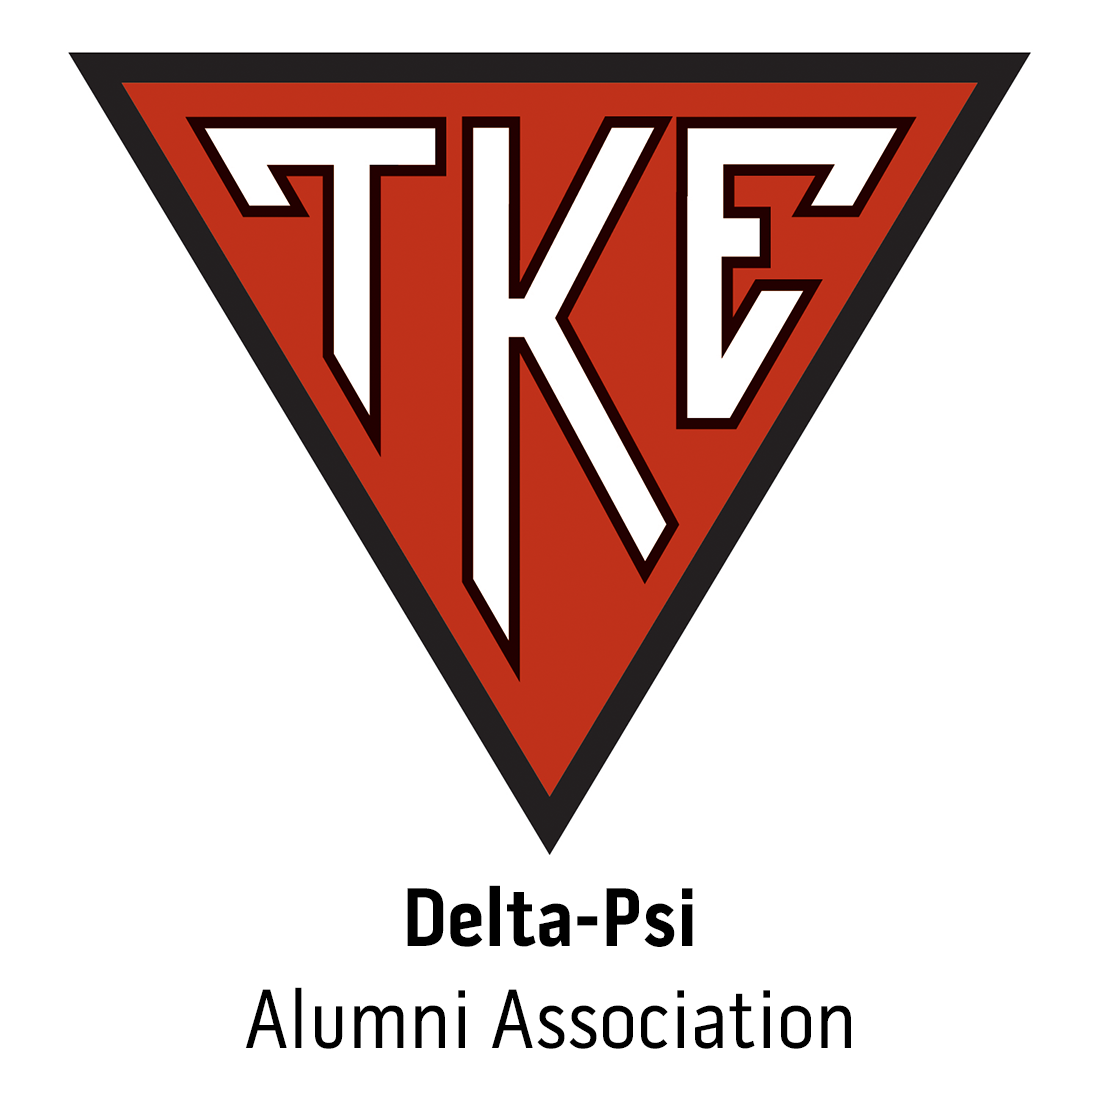 Delta-Psi Alumni Association at North Dakota State University